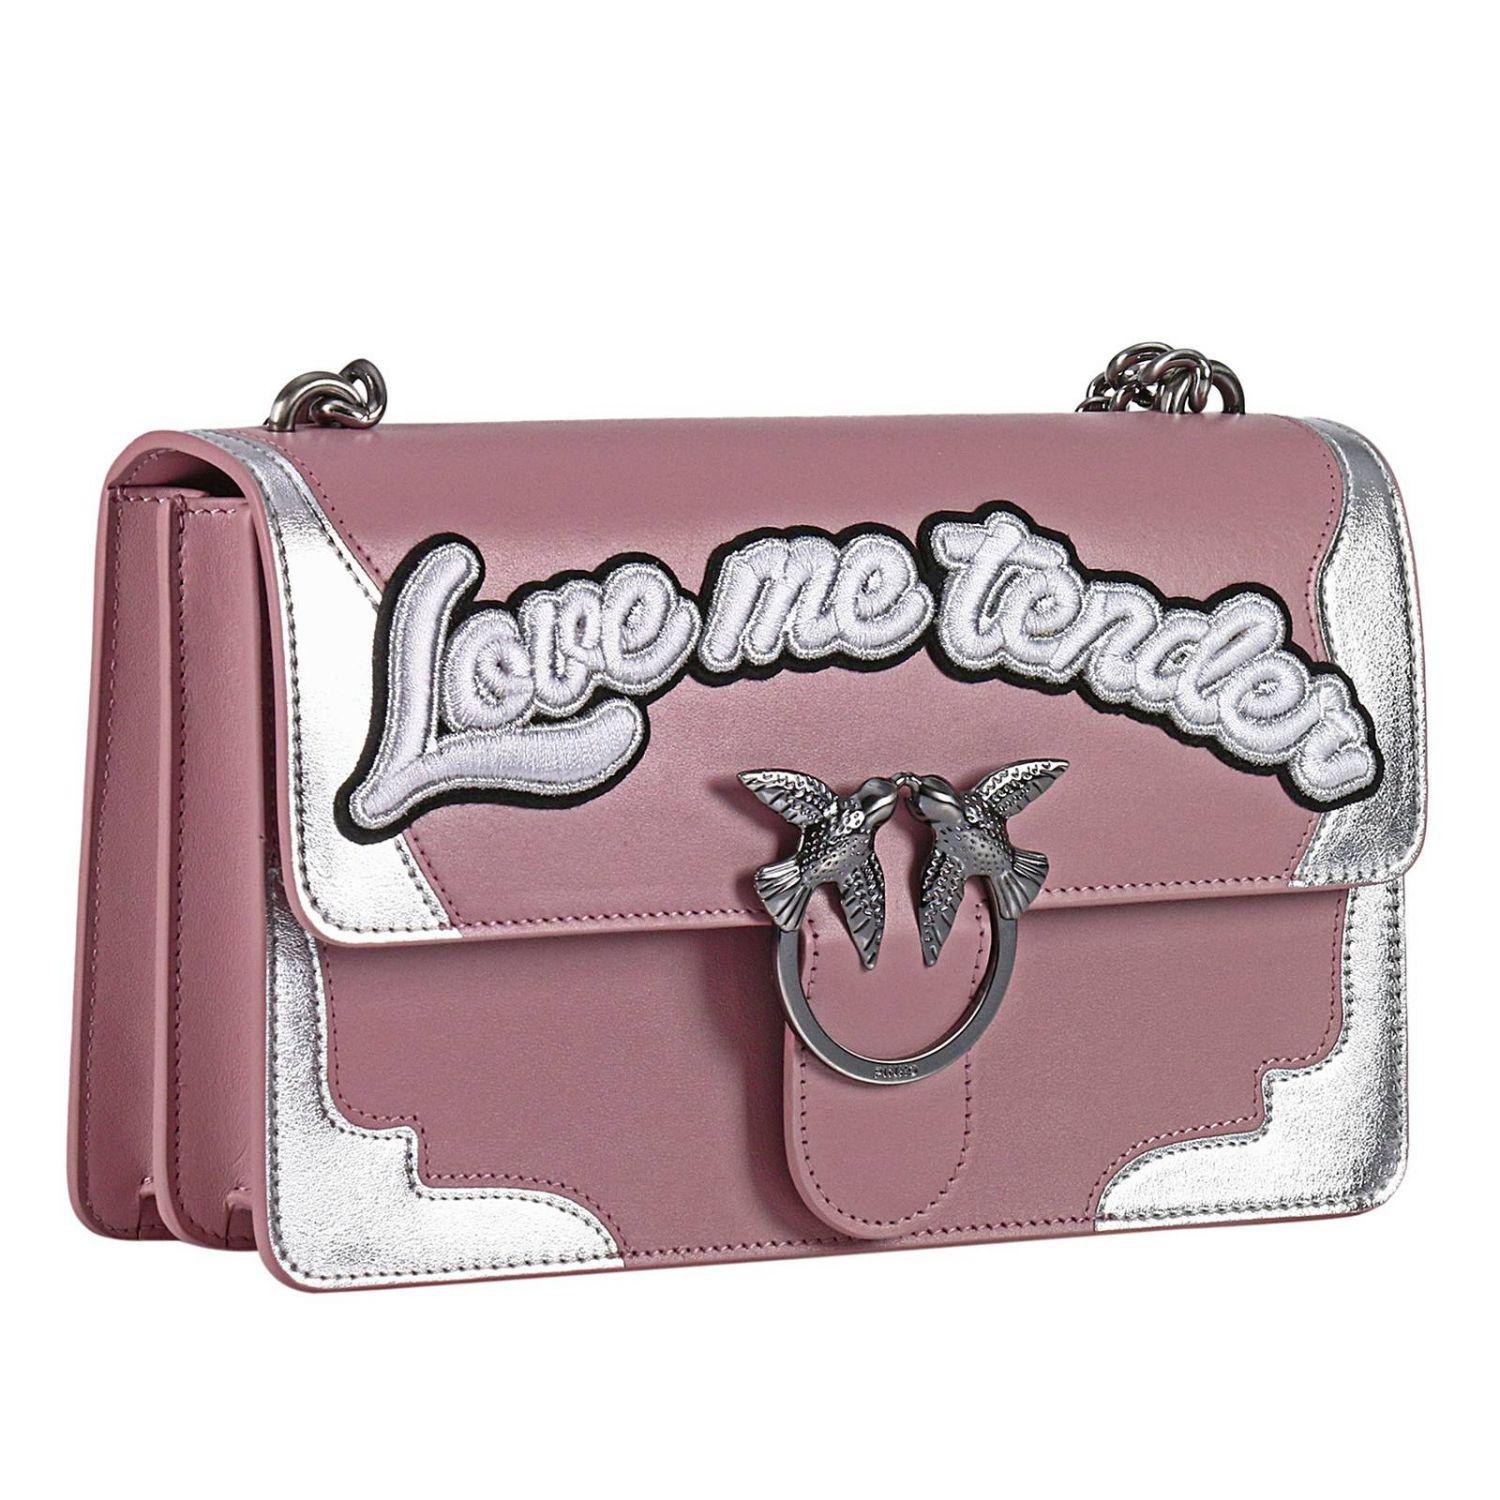 Pinko Love Me Tender Leather Cross-body Bag in Pink - Lyst